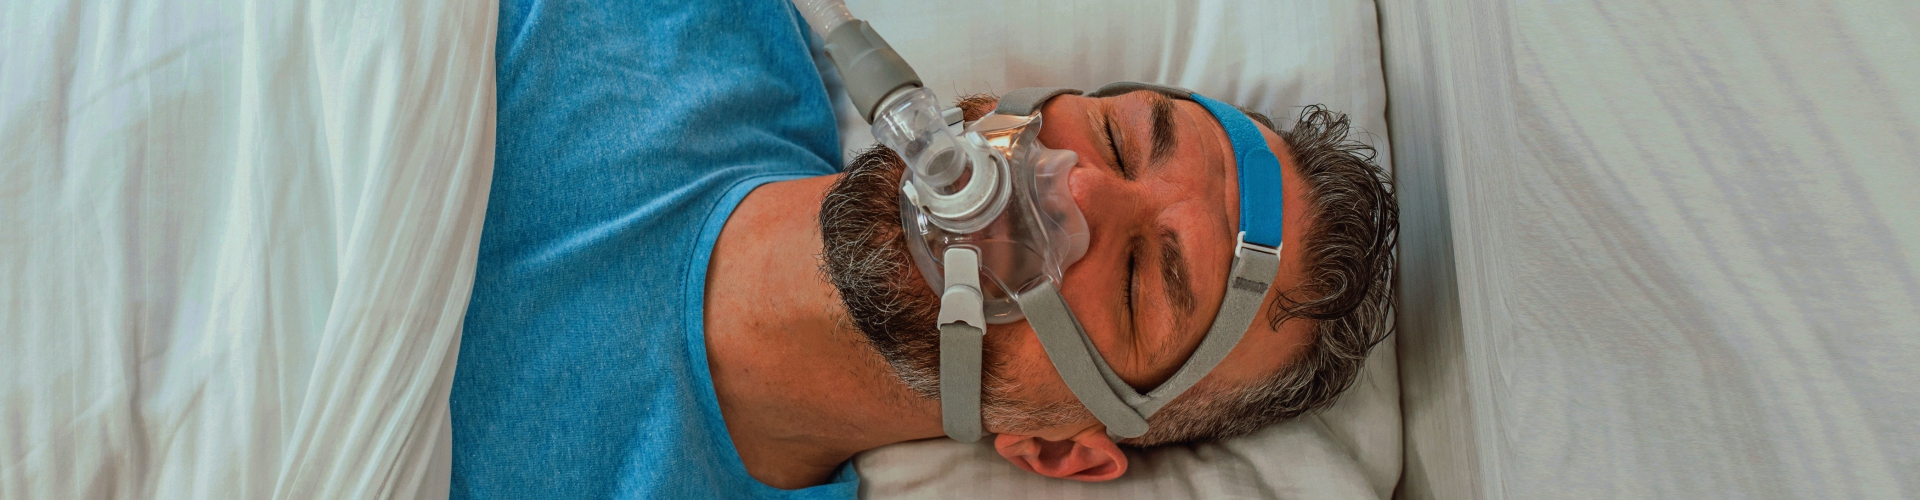 Long-Term Complications of Obstructive Sleep Apnea